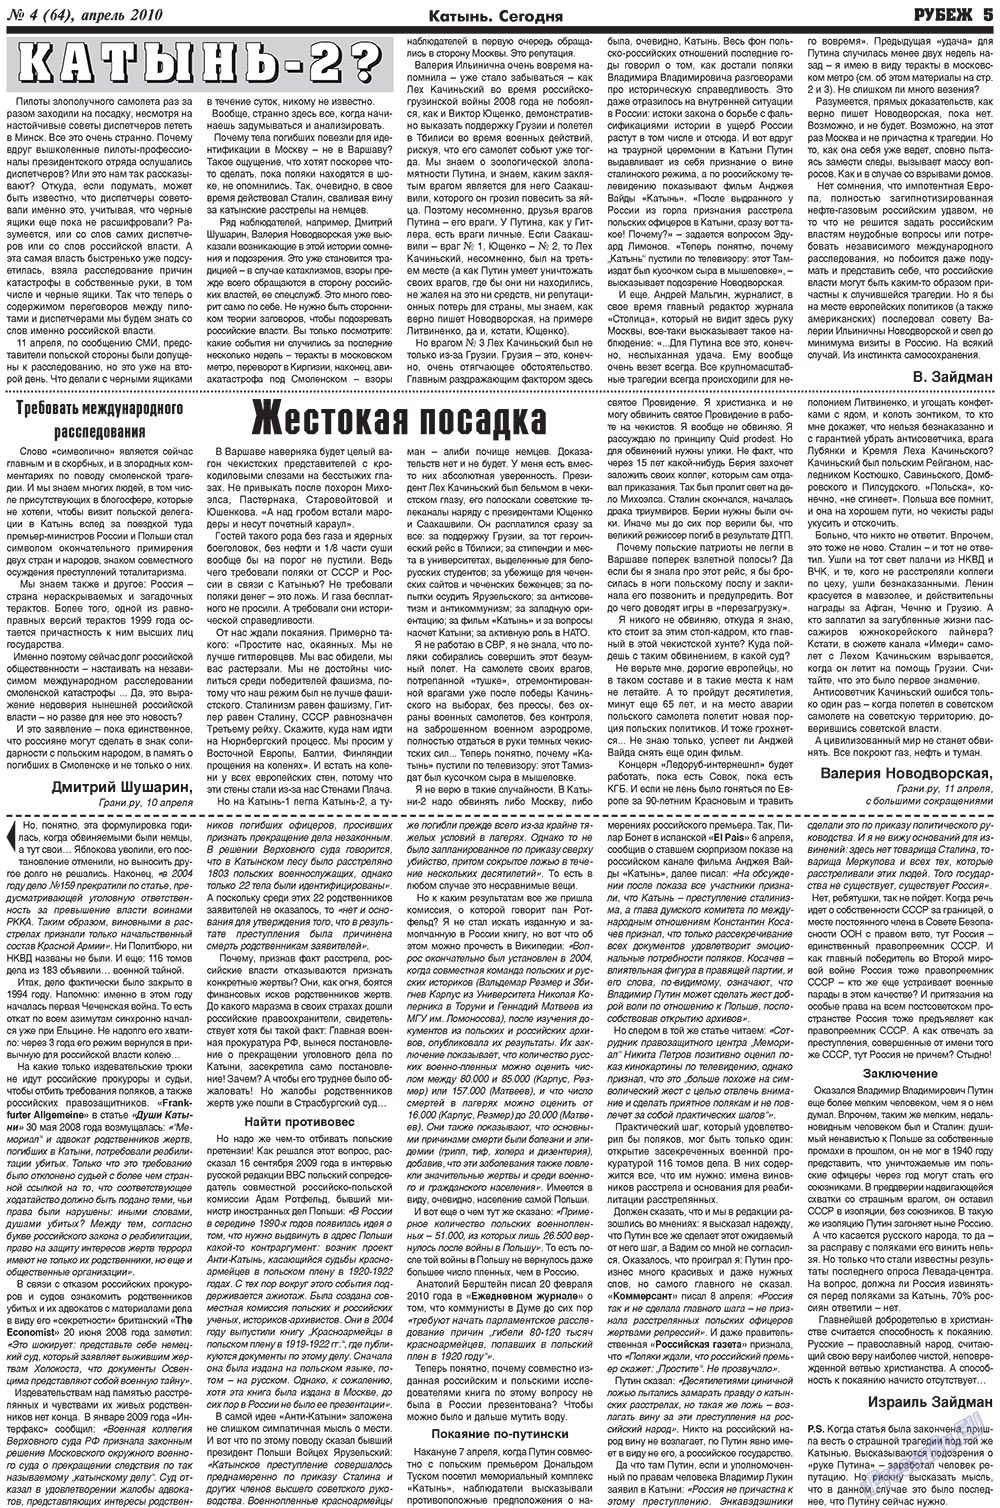 Рубеж, газета. 2010 №4 стр.5